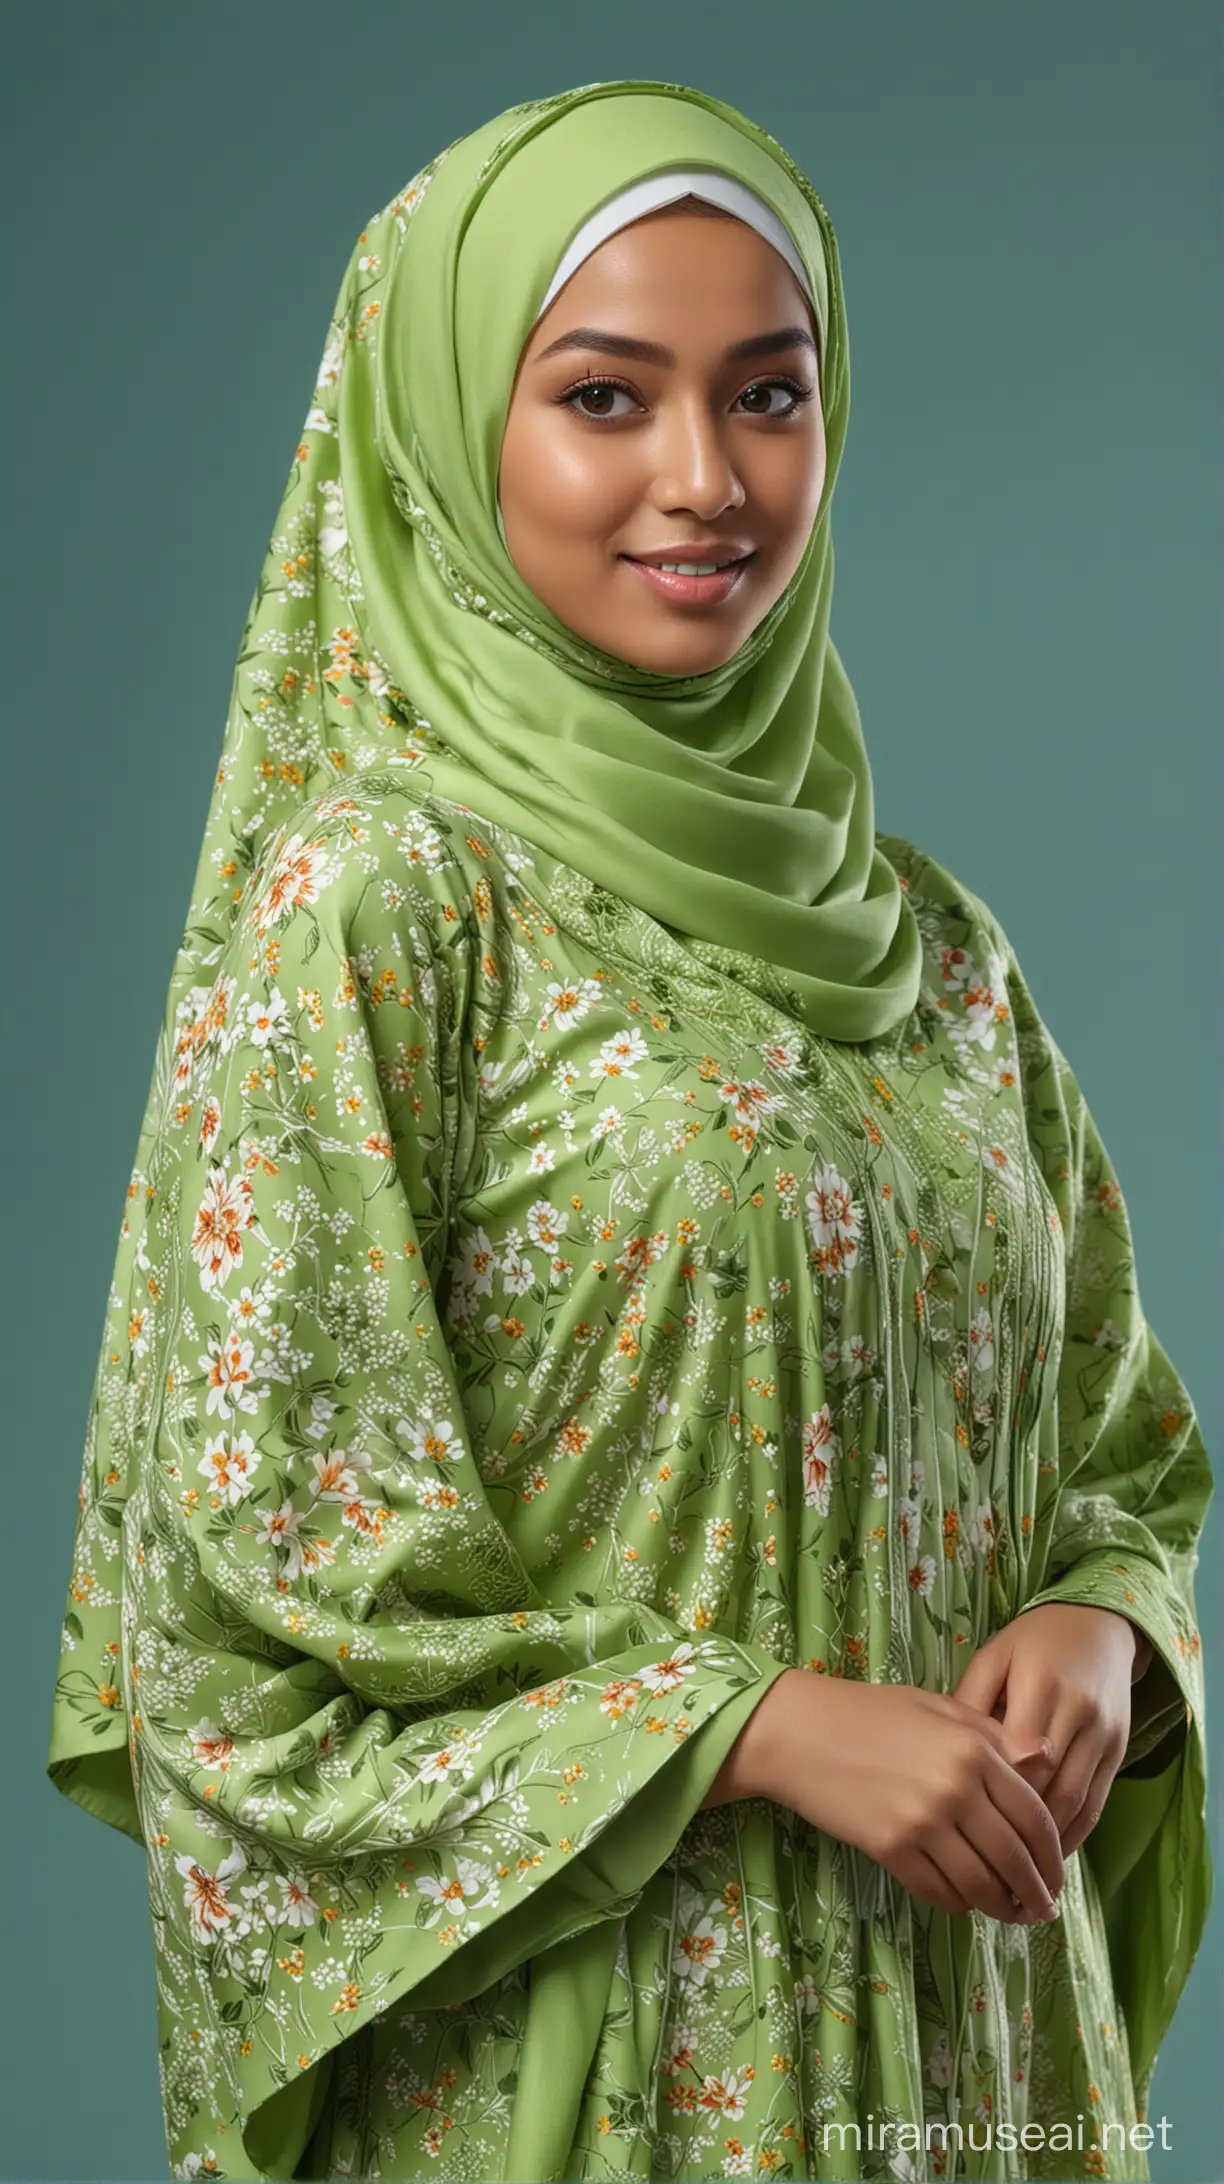 Elegant Malay Woman in Lime Green Baju Abaya with Floral Design